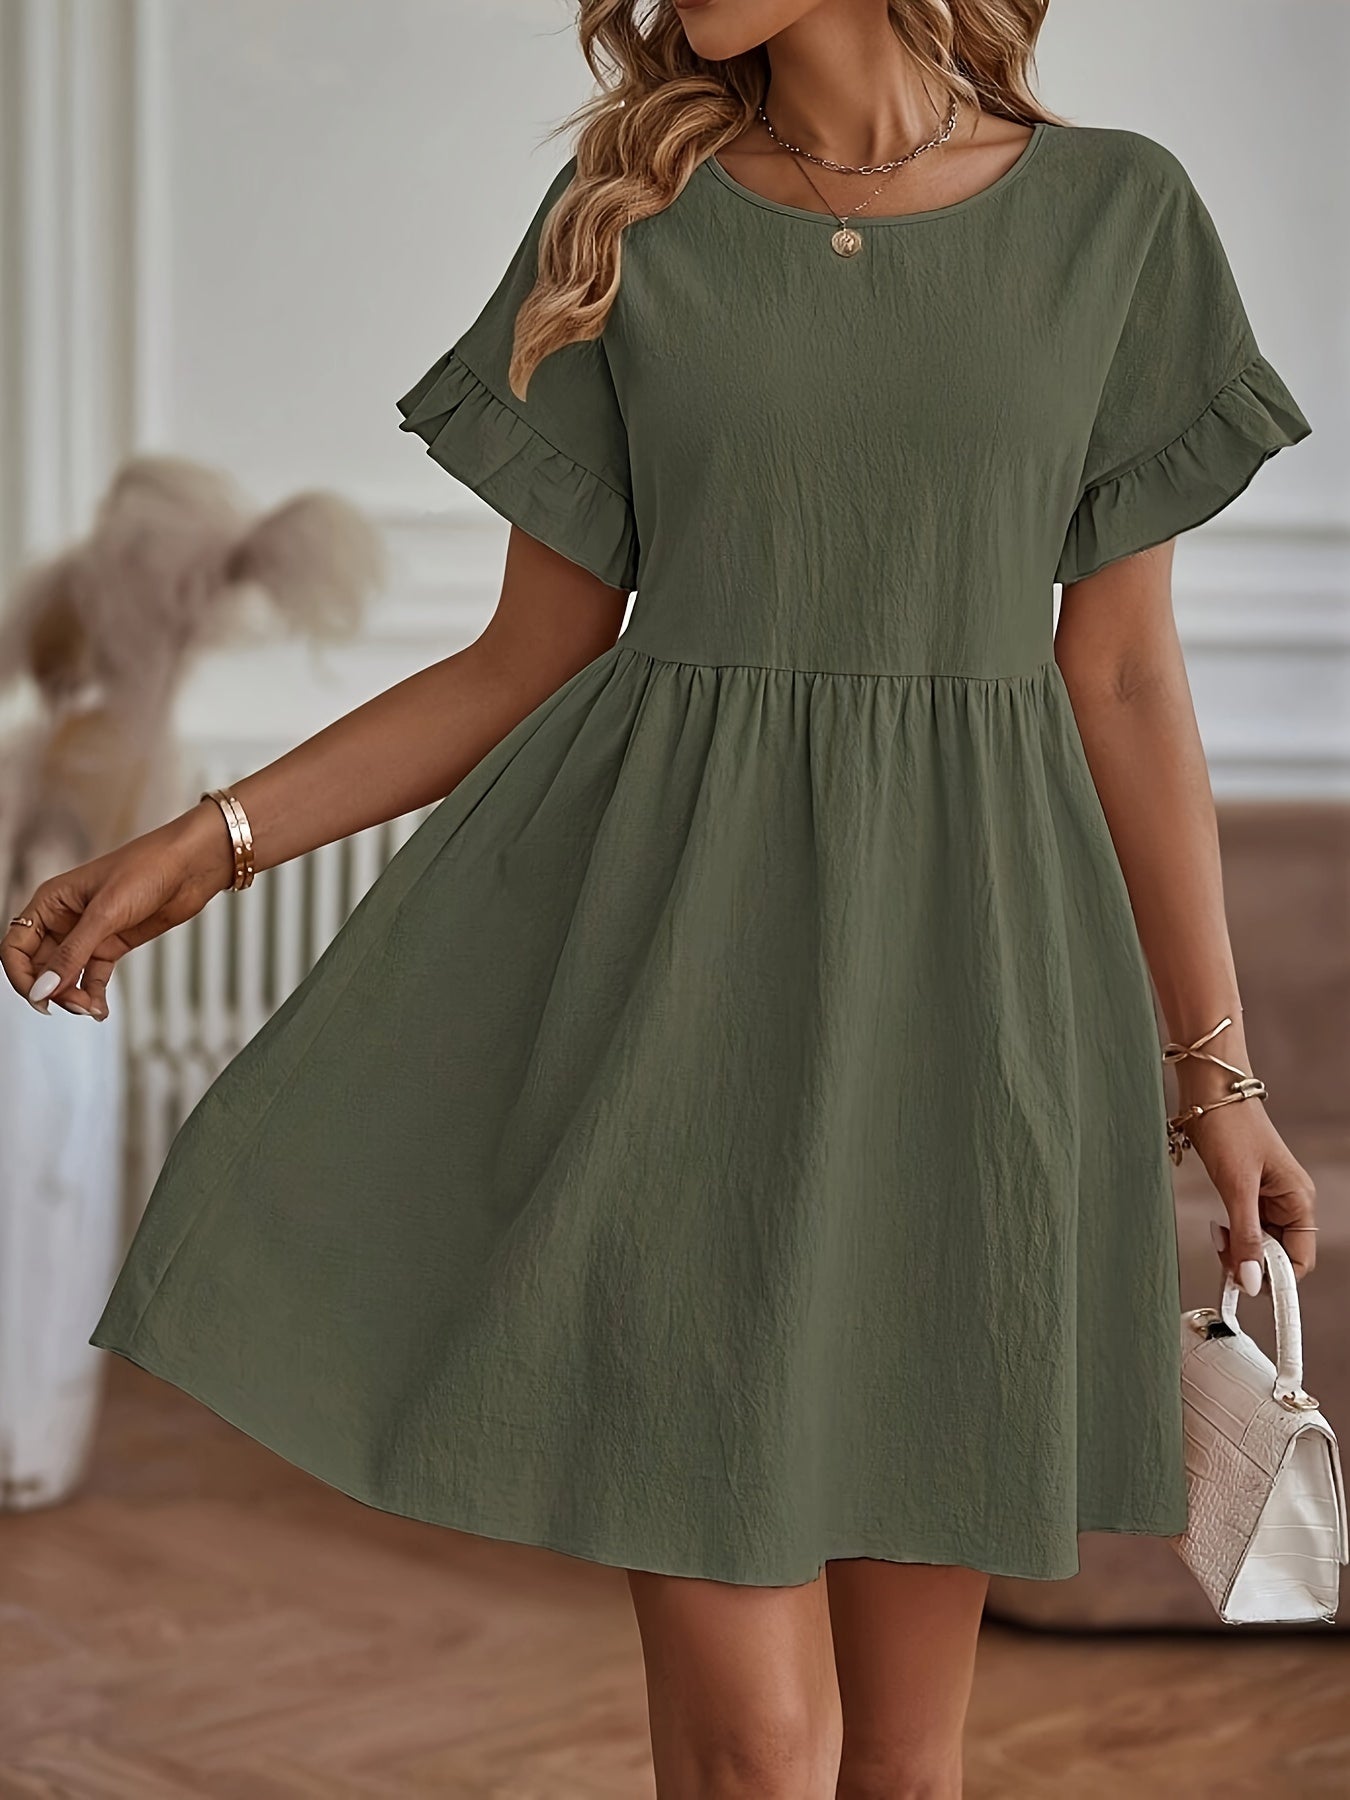 Elegant Solid Short Sleeve Mini Dress, Bohemian Cotton Mini Dress For Spring & Summer, Women's Clothing